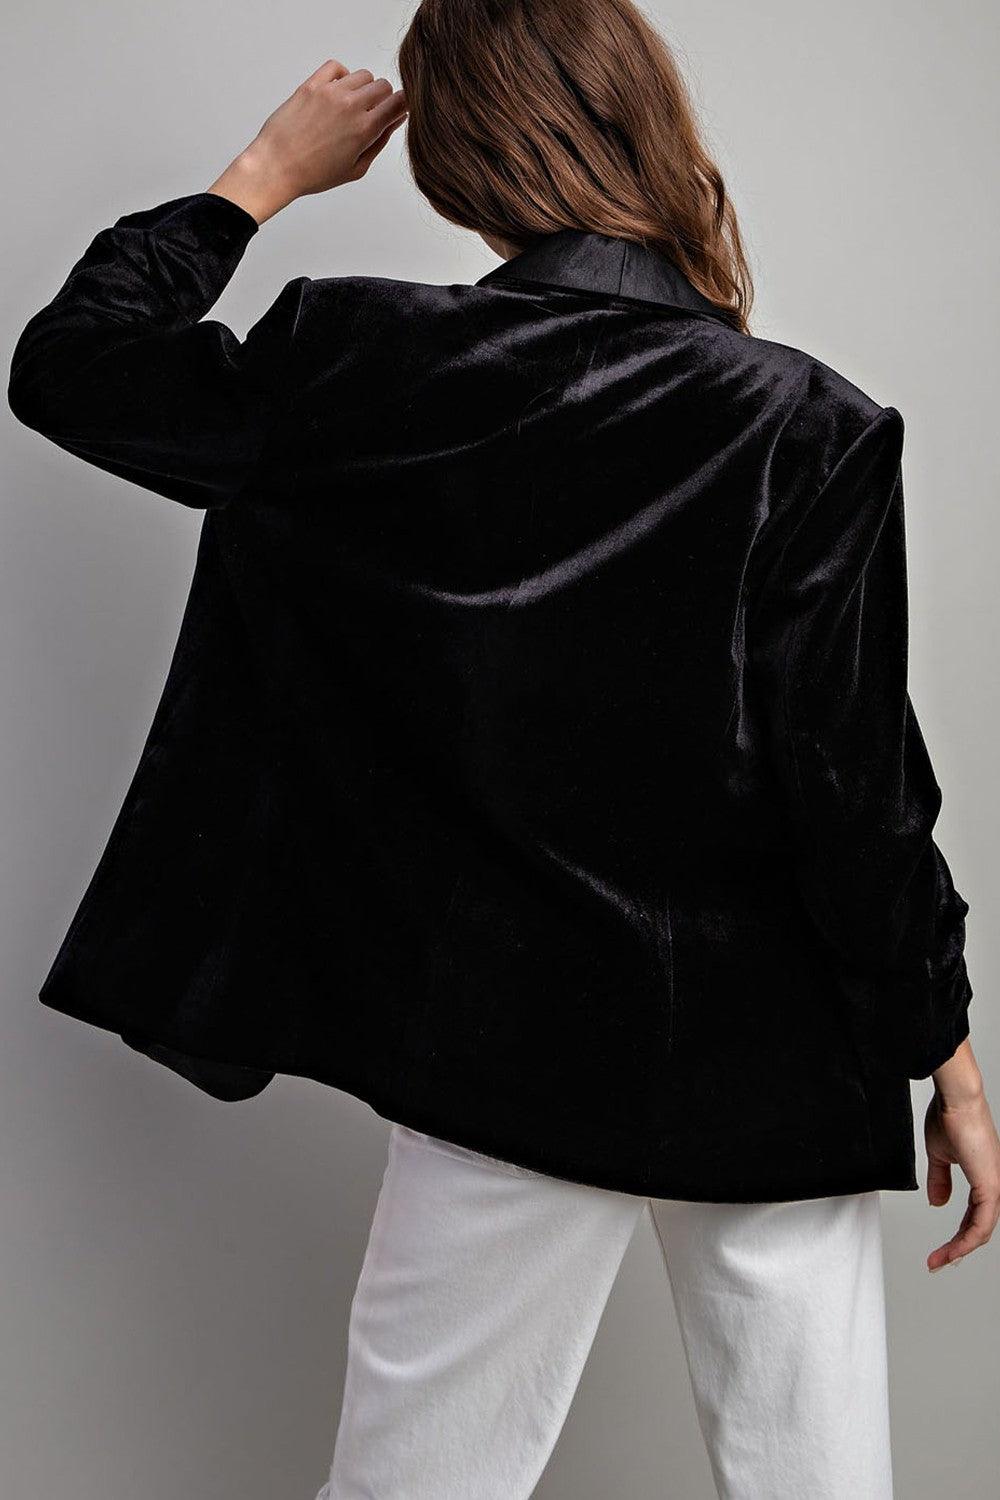 velvet tuxedo blazer - RK Collections Boutique